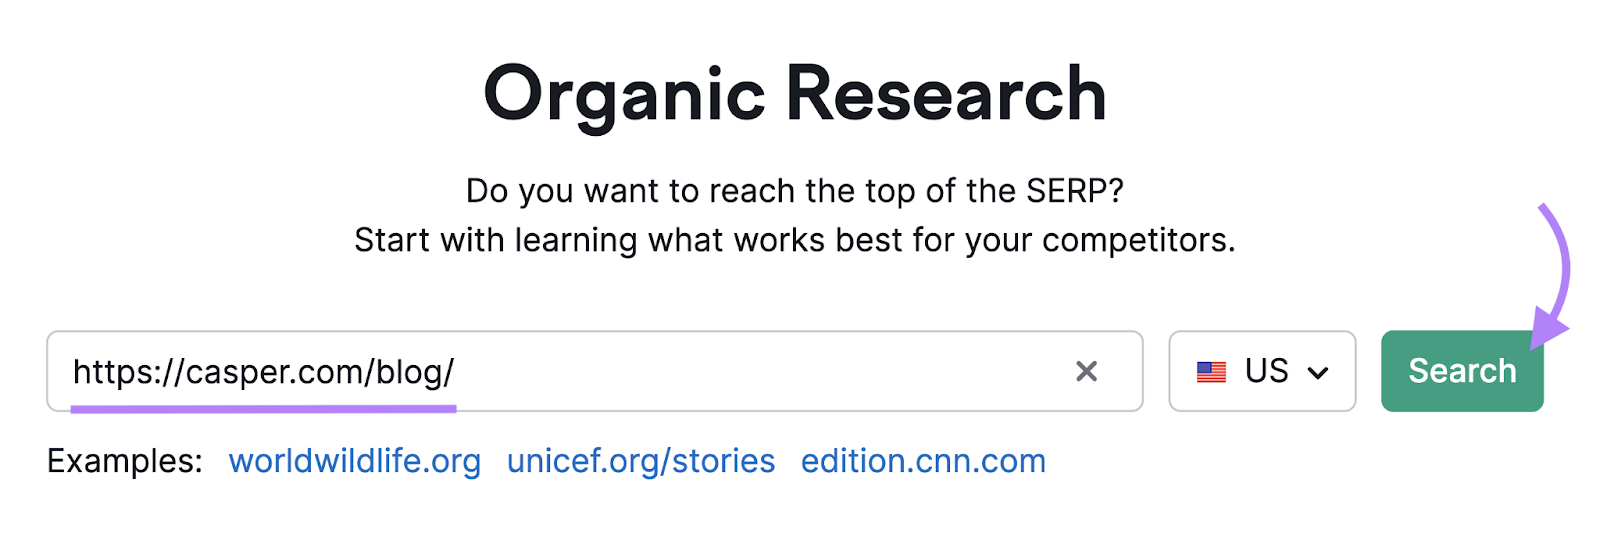 //casper.com/blog/" domain entered into the Organic Research instrumentality   hunt  bar